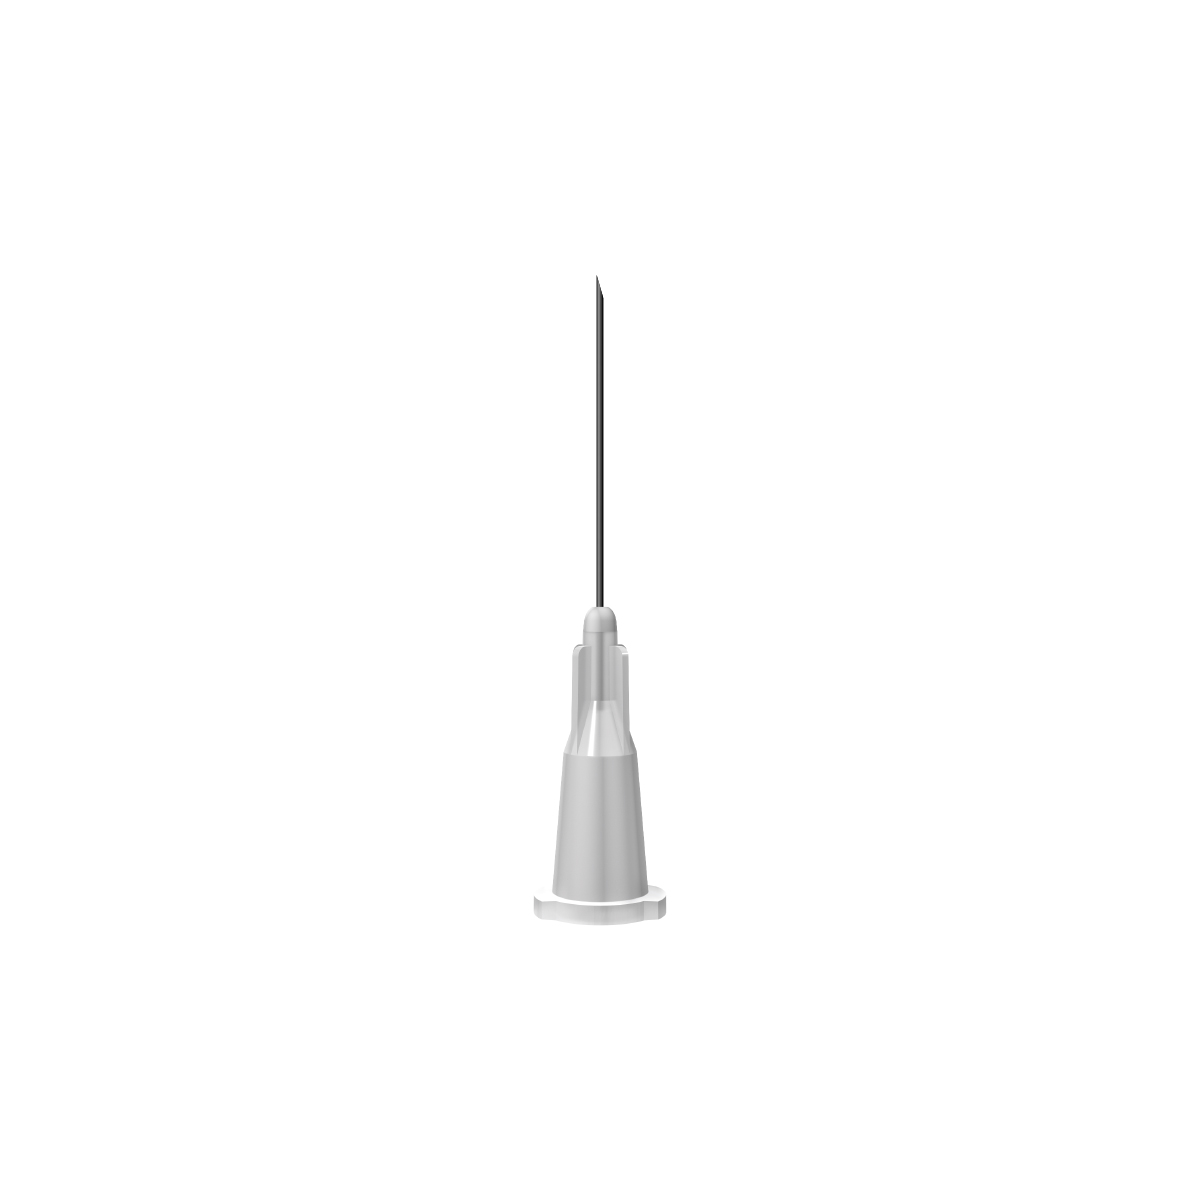 Terumo: Grey 27G 19mm (¾ inch) needle 